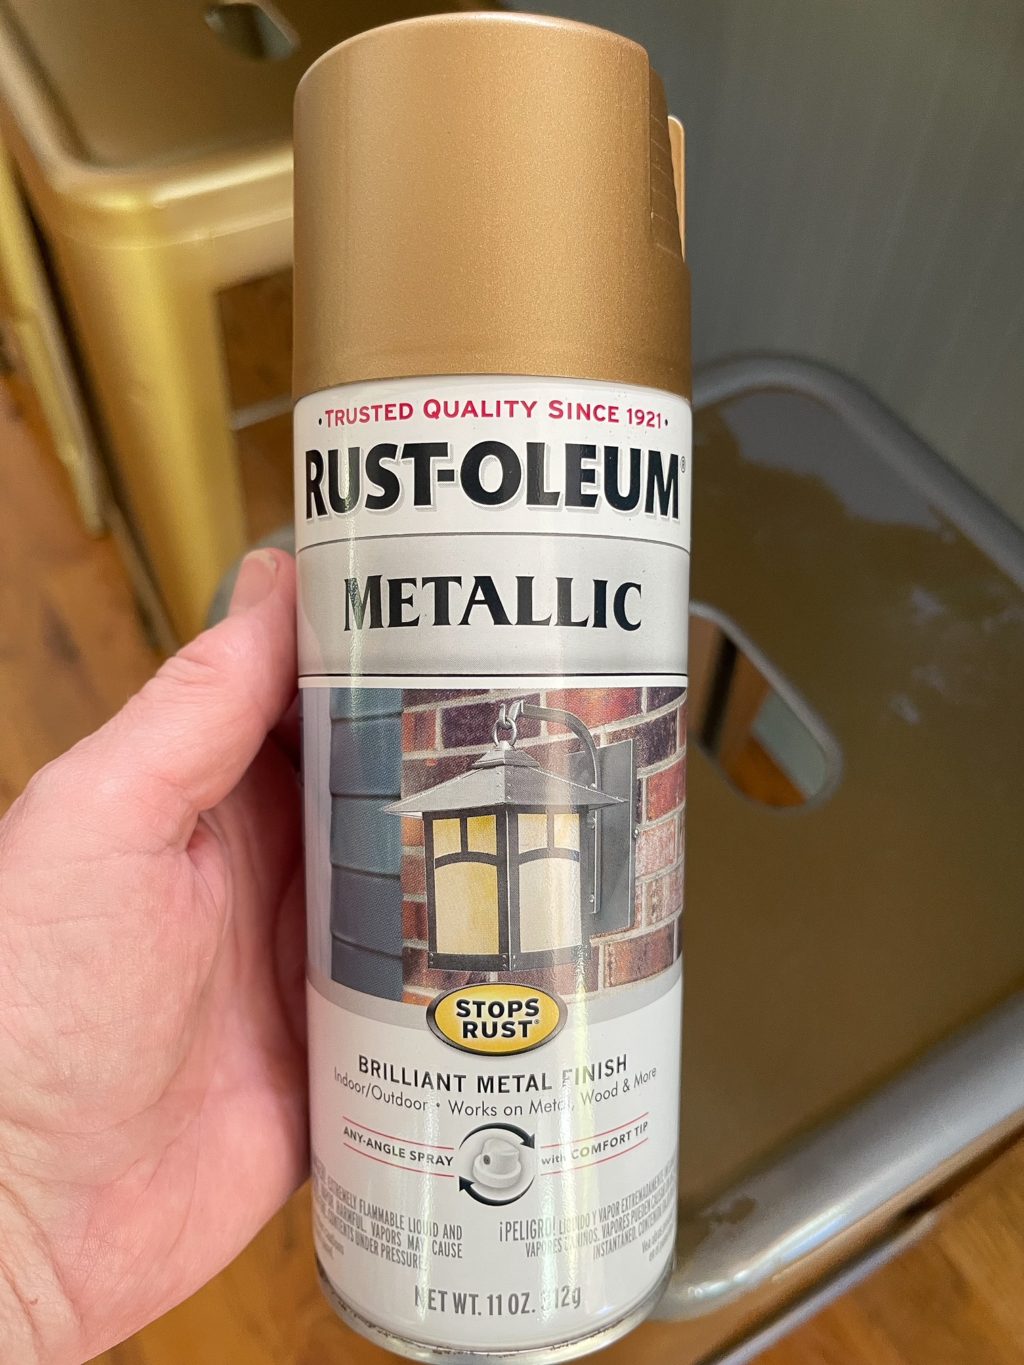 Can of rust-oleum metallic spray paint